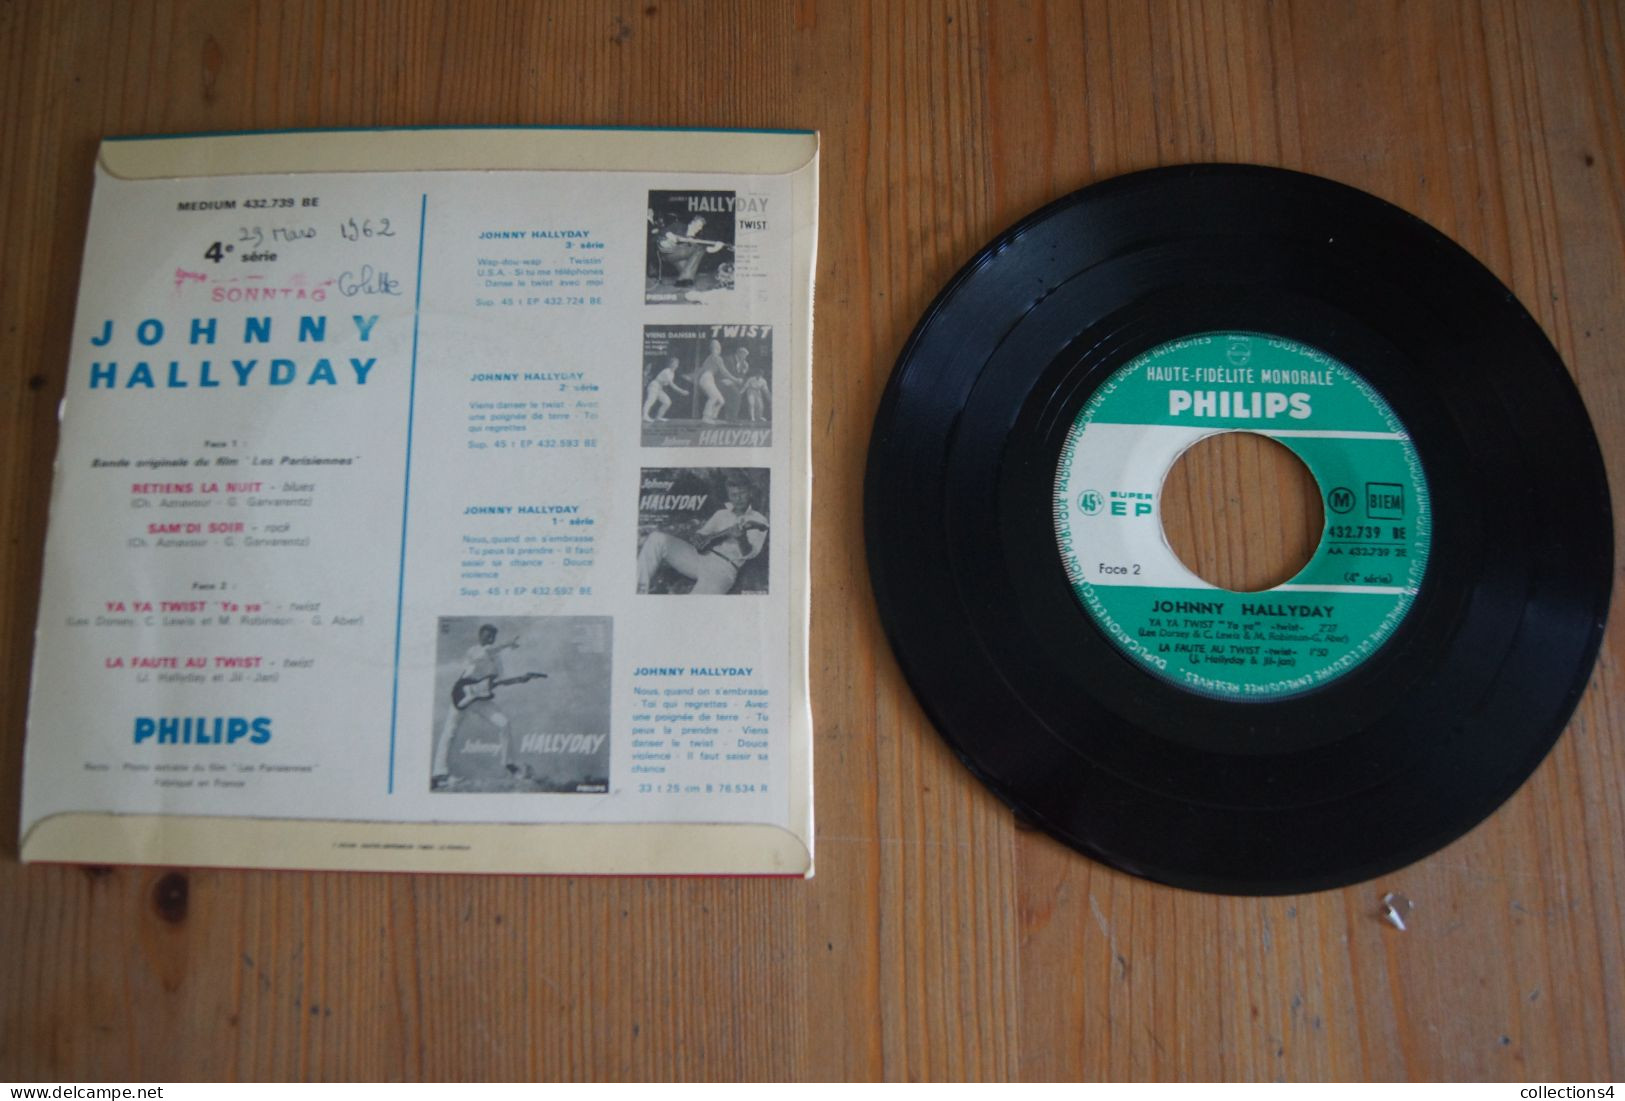 JOHNNY HALLYDAY RETIENS LA NUIT  EP 1962 VARIANTE CATHERINE DENEUVE LANGUETTE - 45 T - Maxi-Single